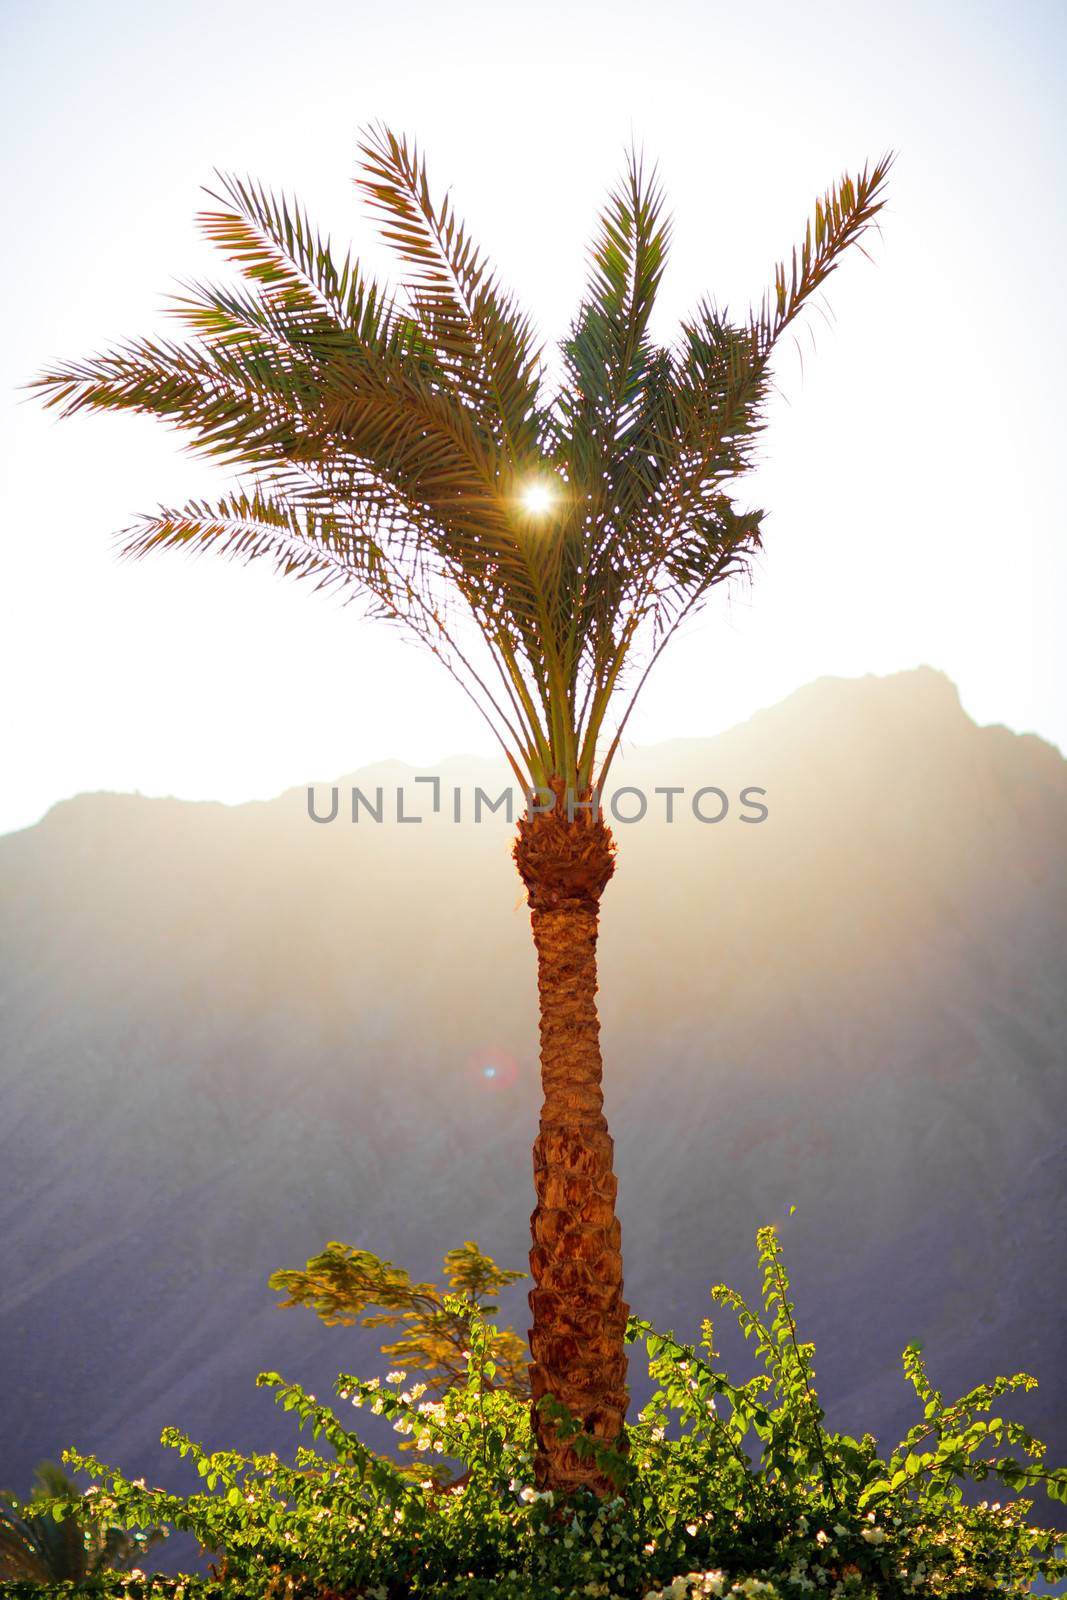 sun through the palm leaves by vsurkov